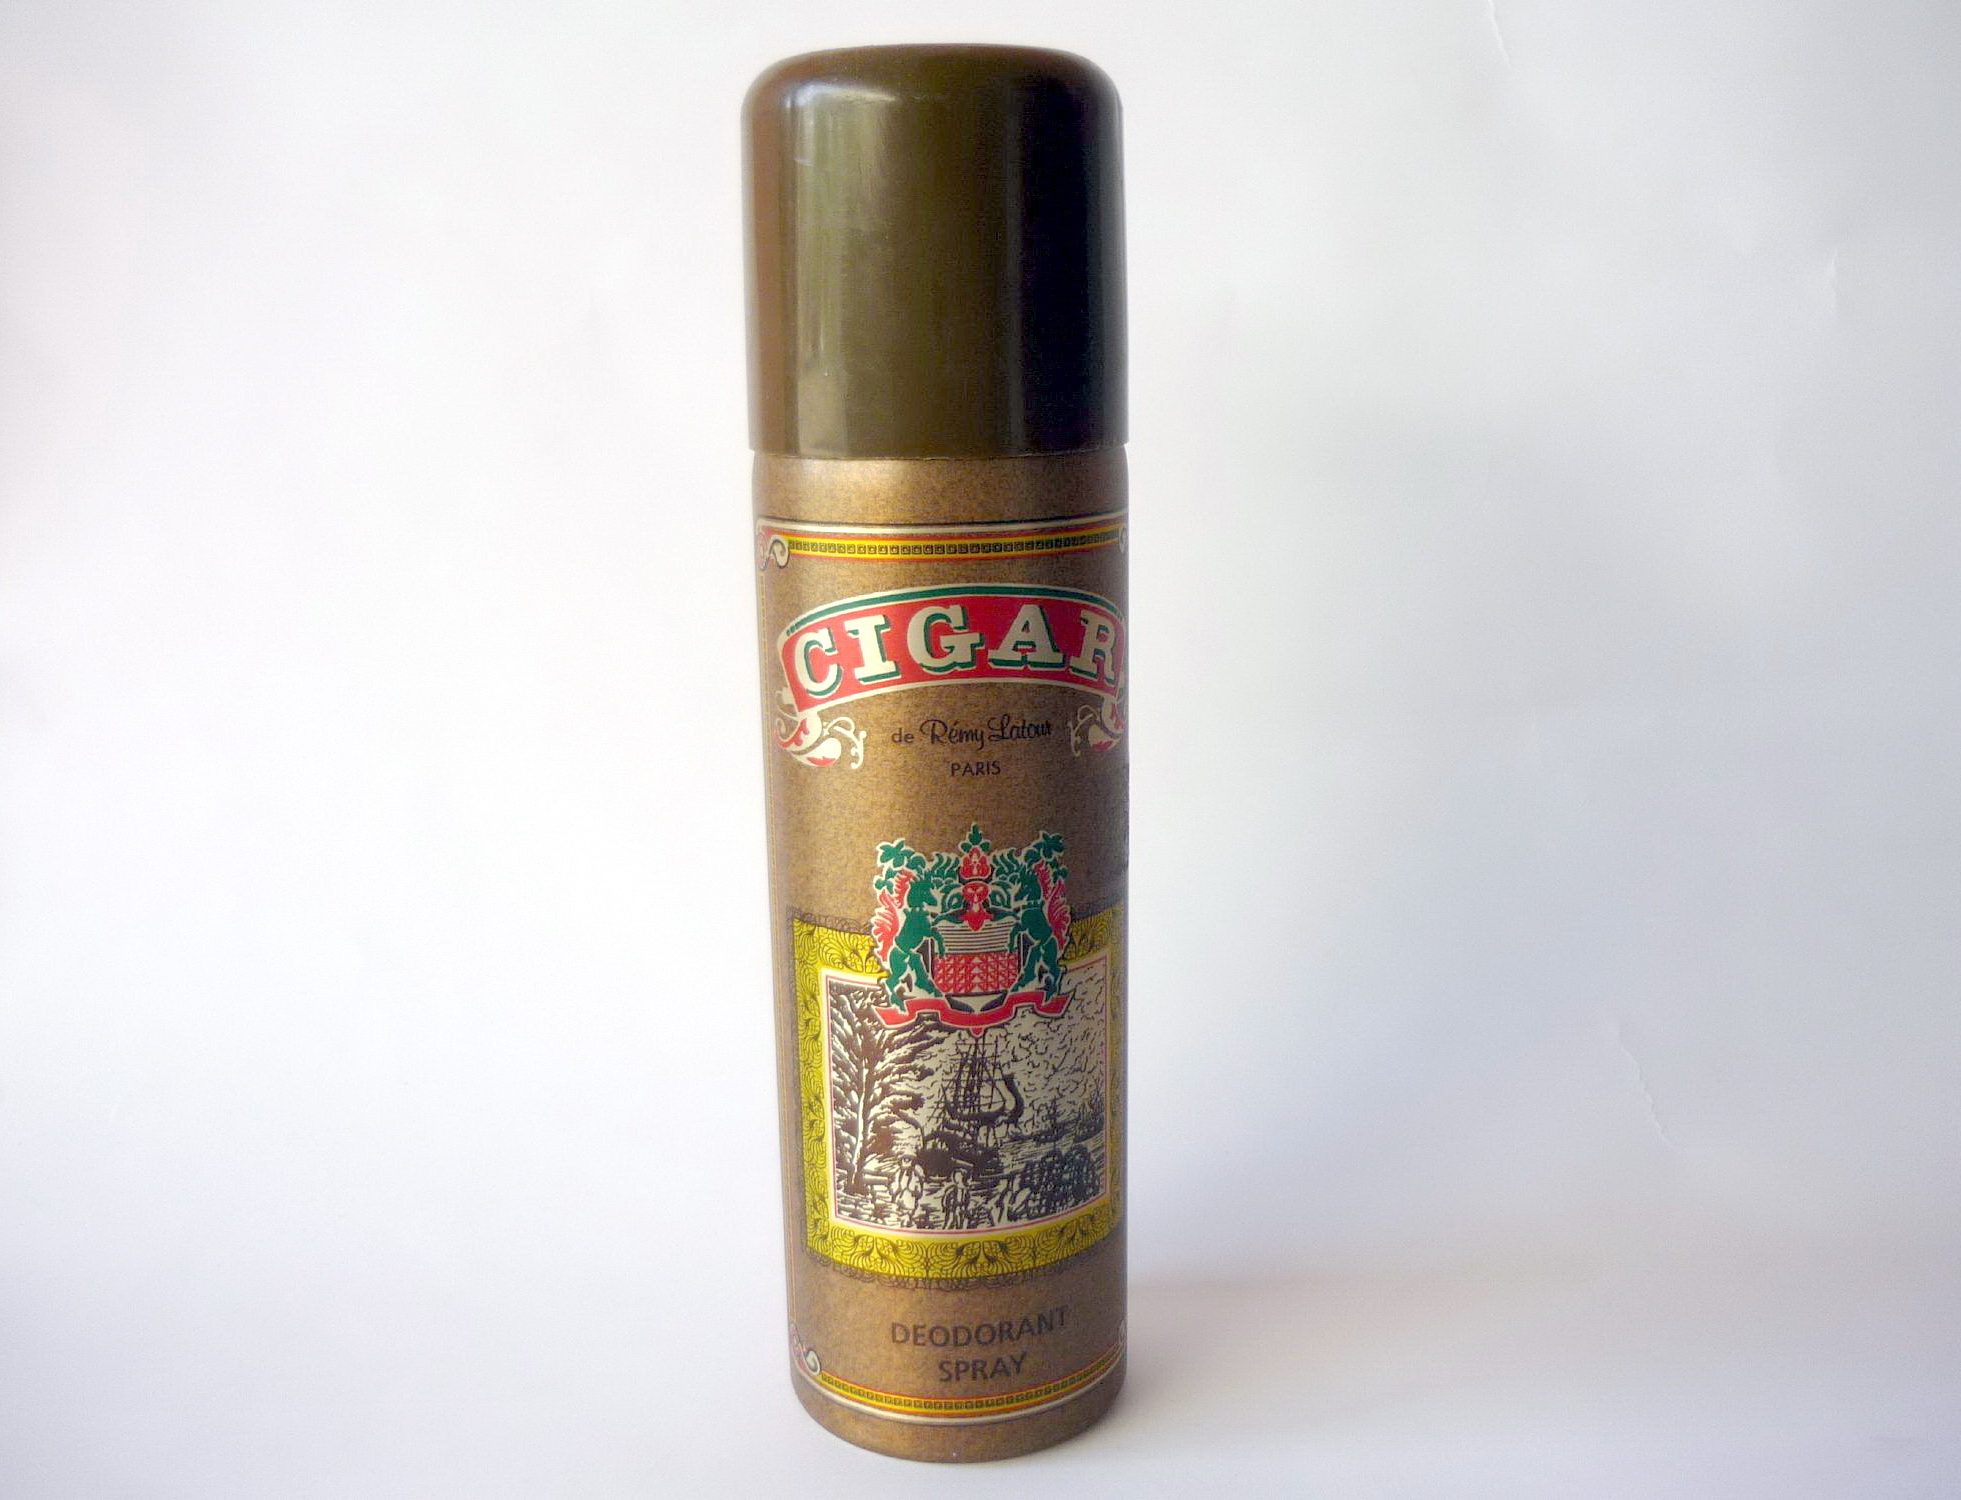 Cigar deodorant spray photo